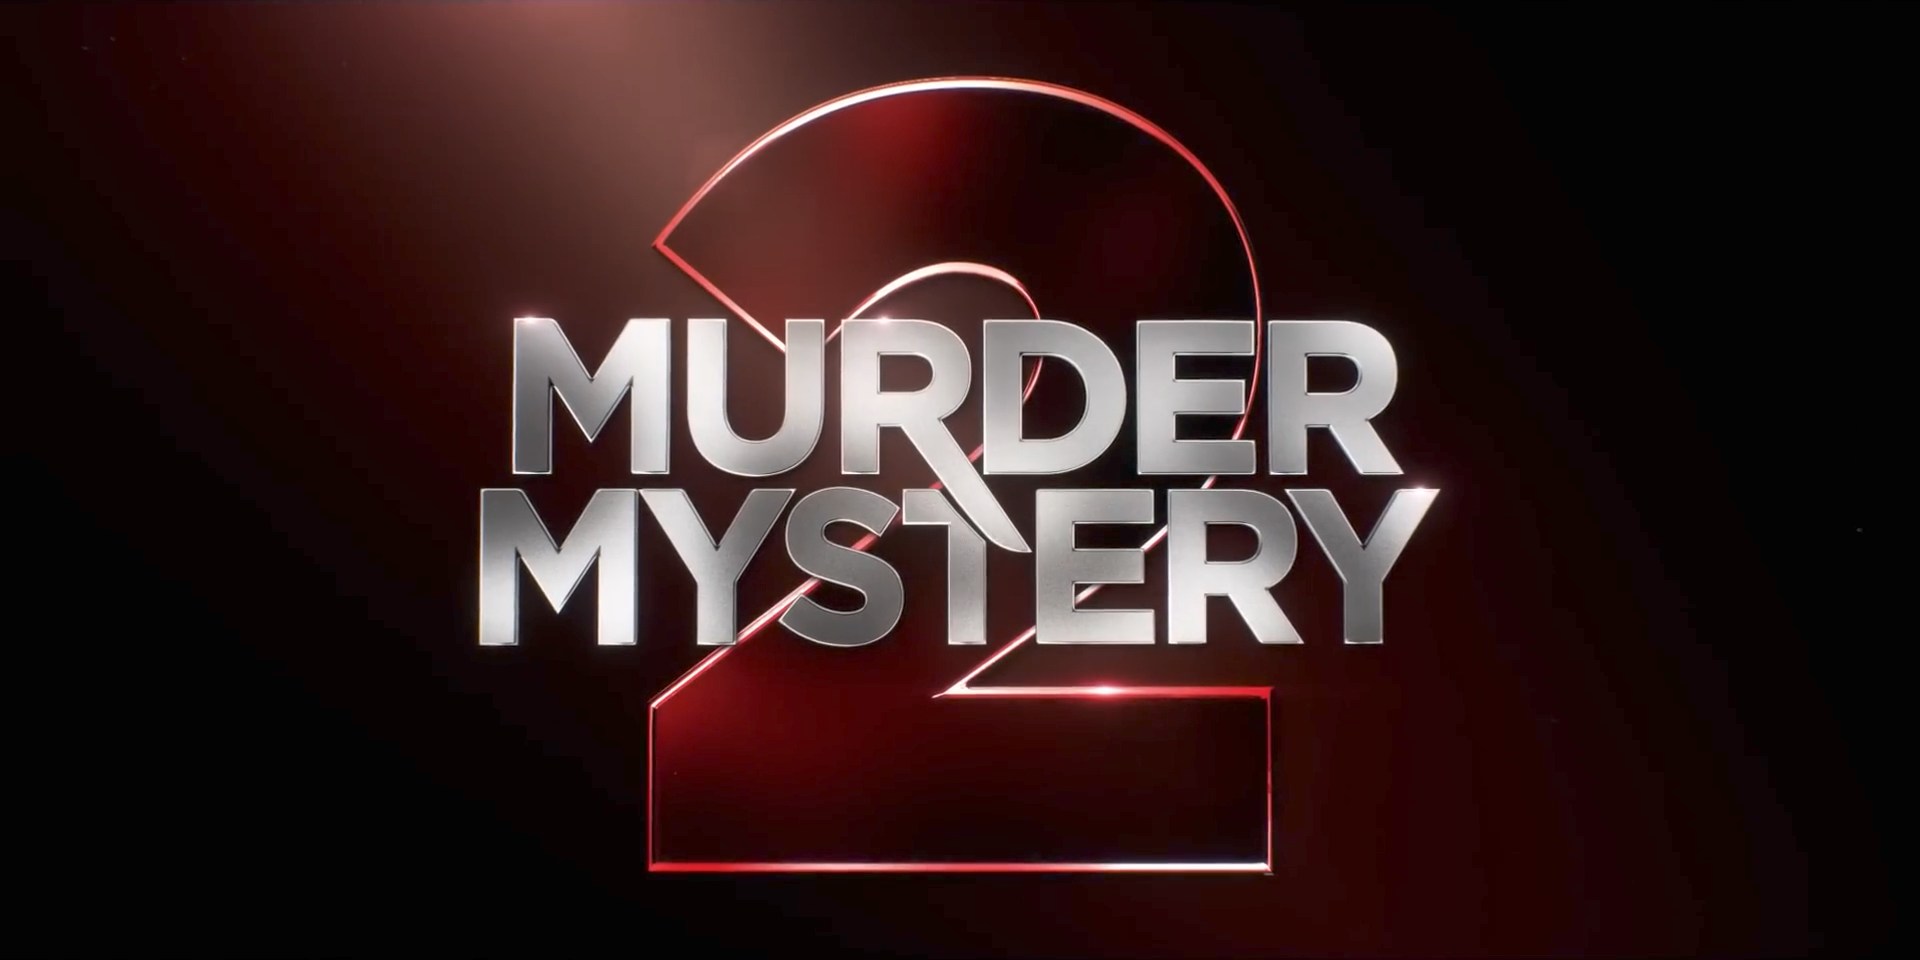 Murder Mystery 2 News & Updates: Everything We Know